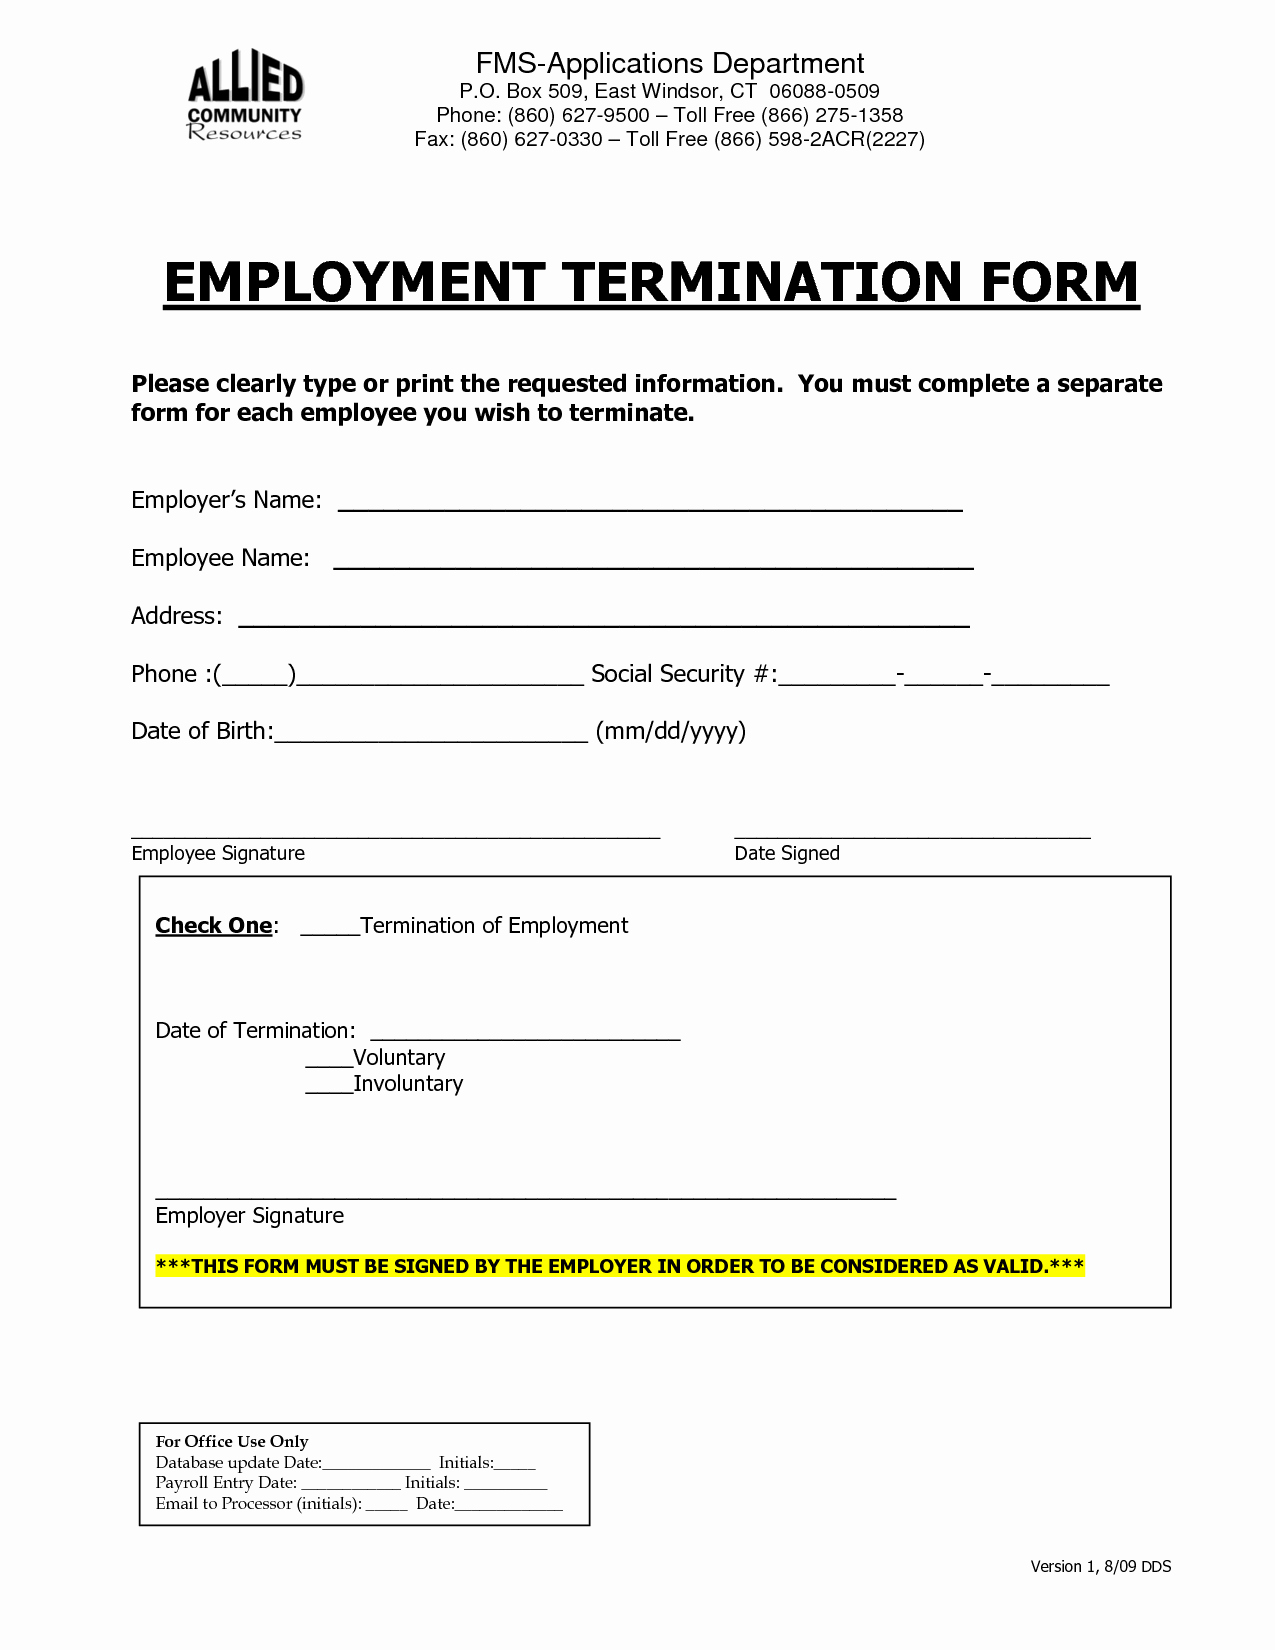 Employment Termination Checklist Template Fresh Employee Termination form Free Printable Documents